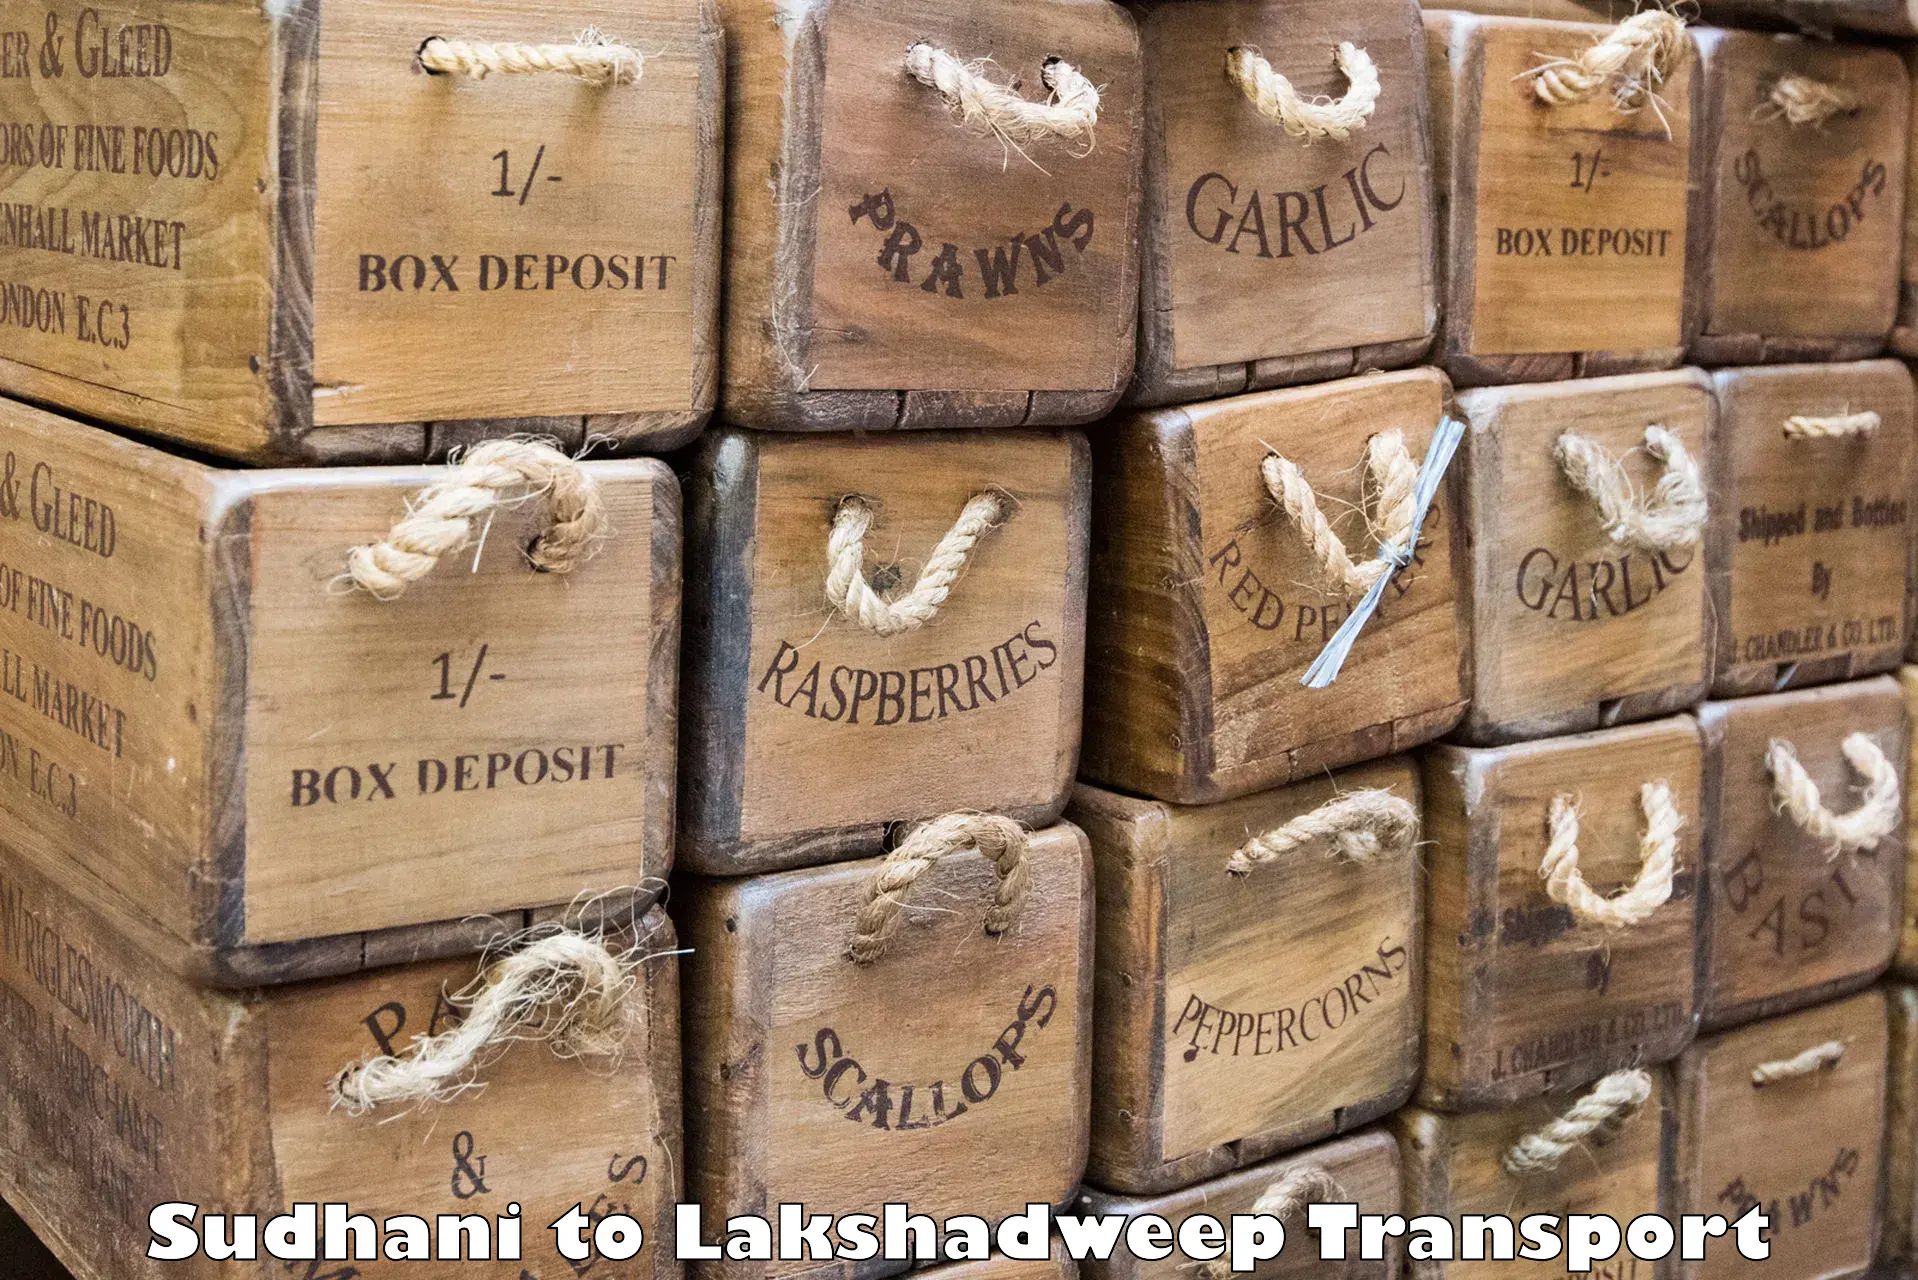 Shipping partner Sudhani to Lakshadweep